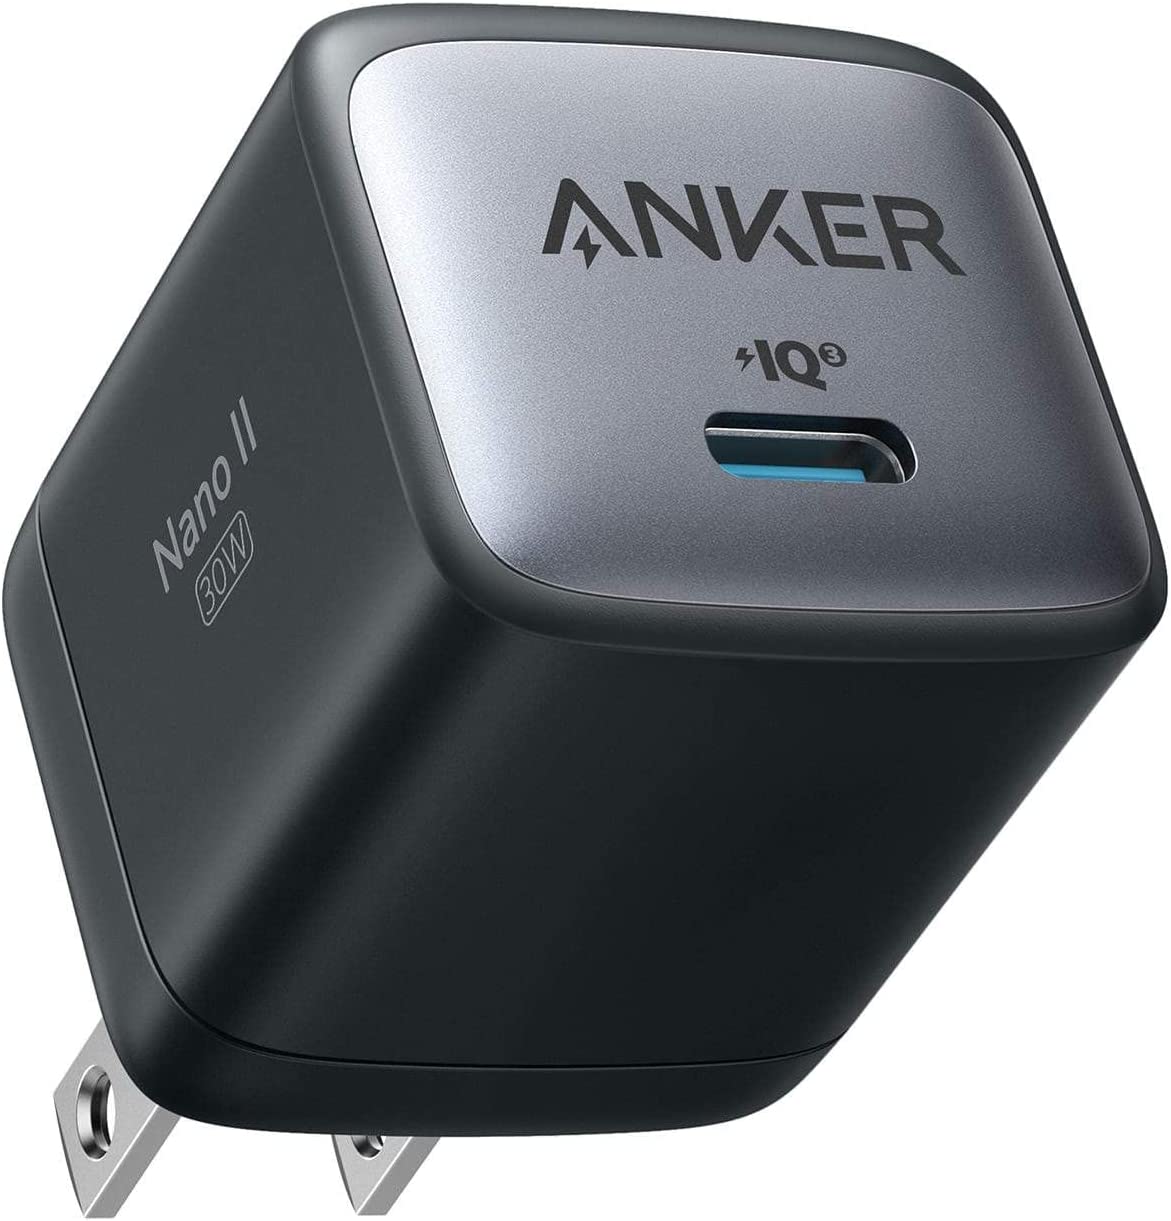 Anker Nano II Wall Charger, 1 USB Port, 30W - Black